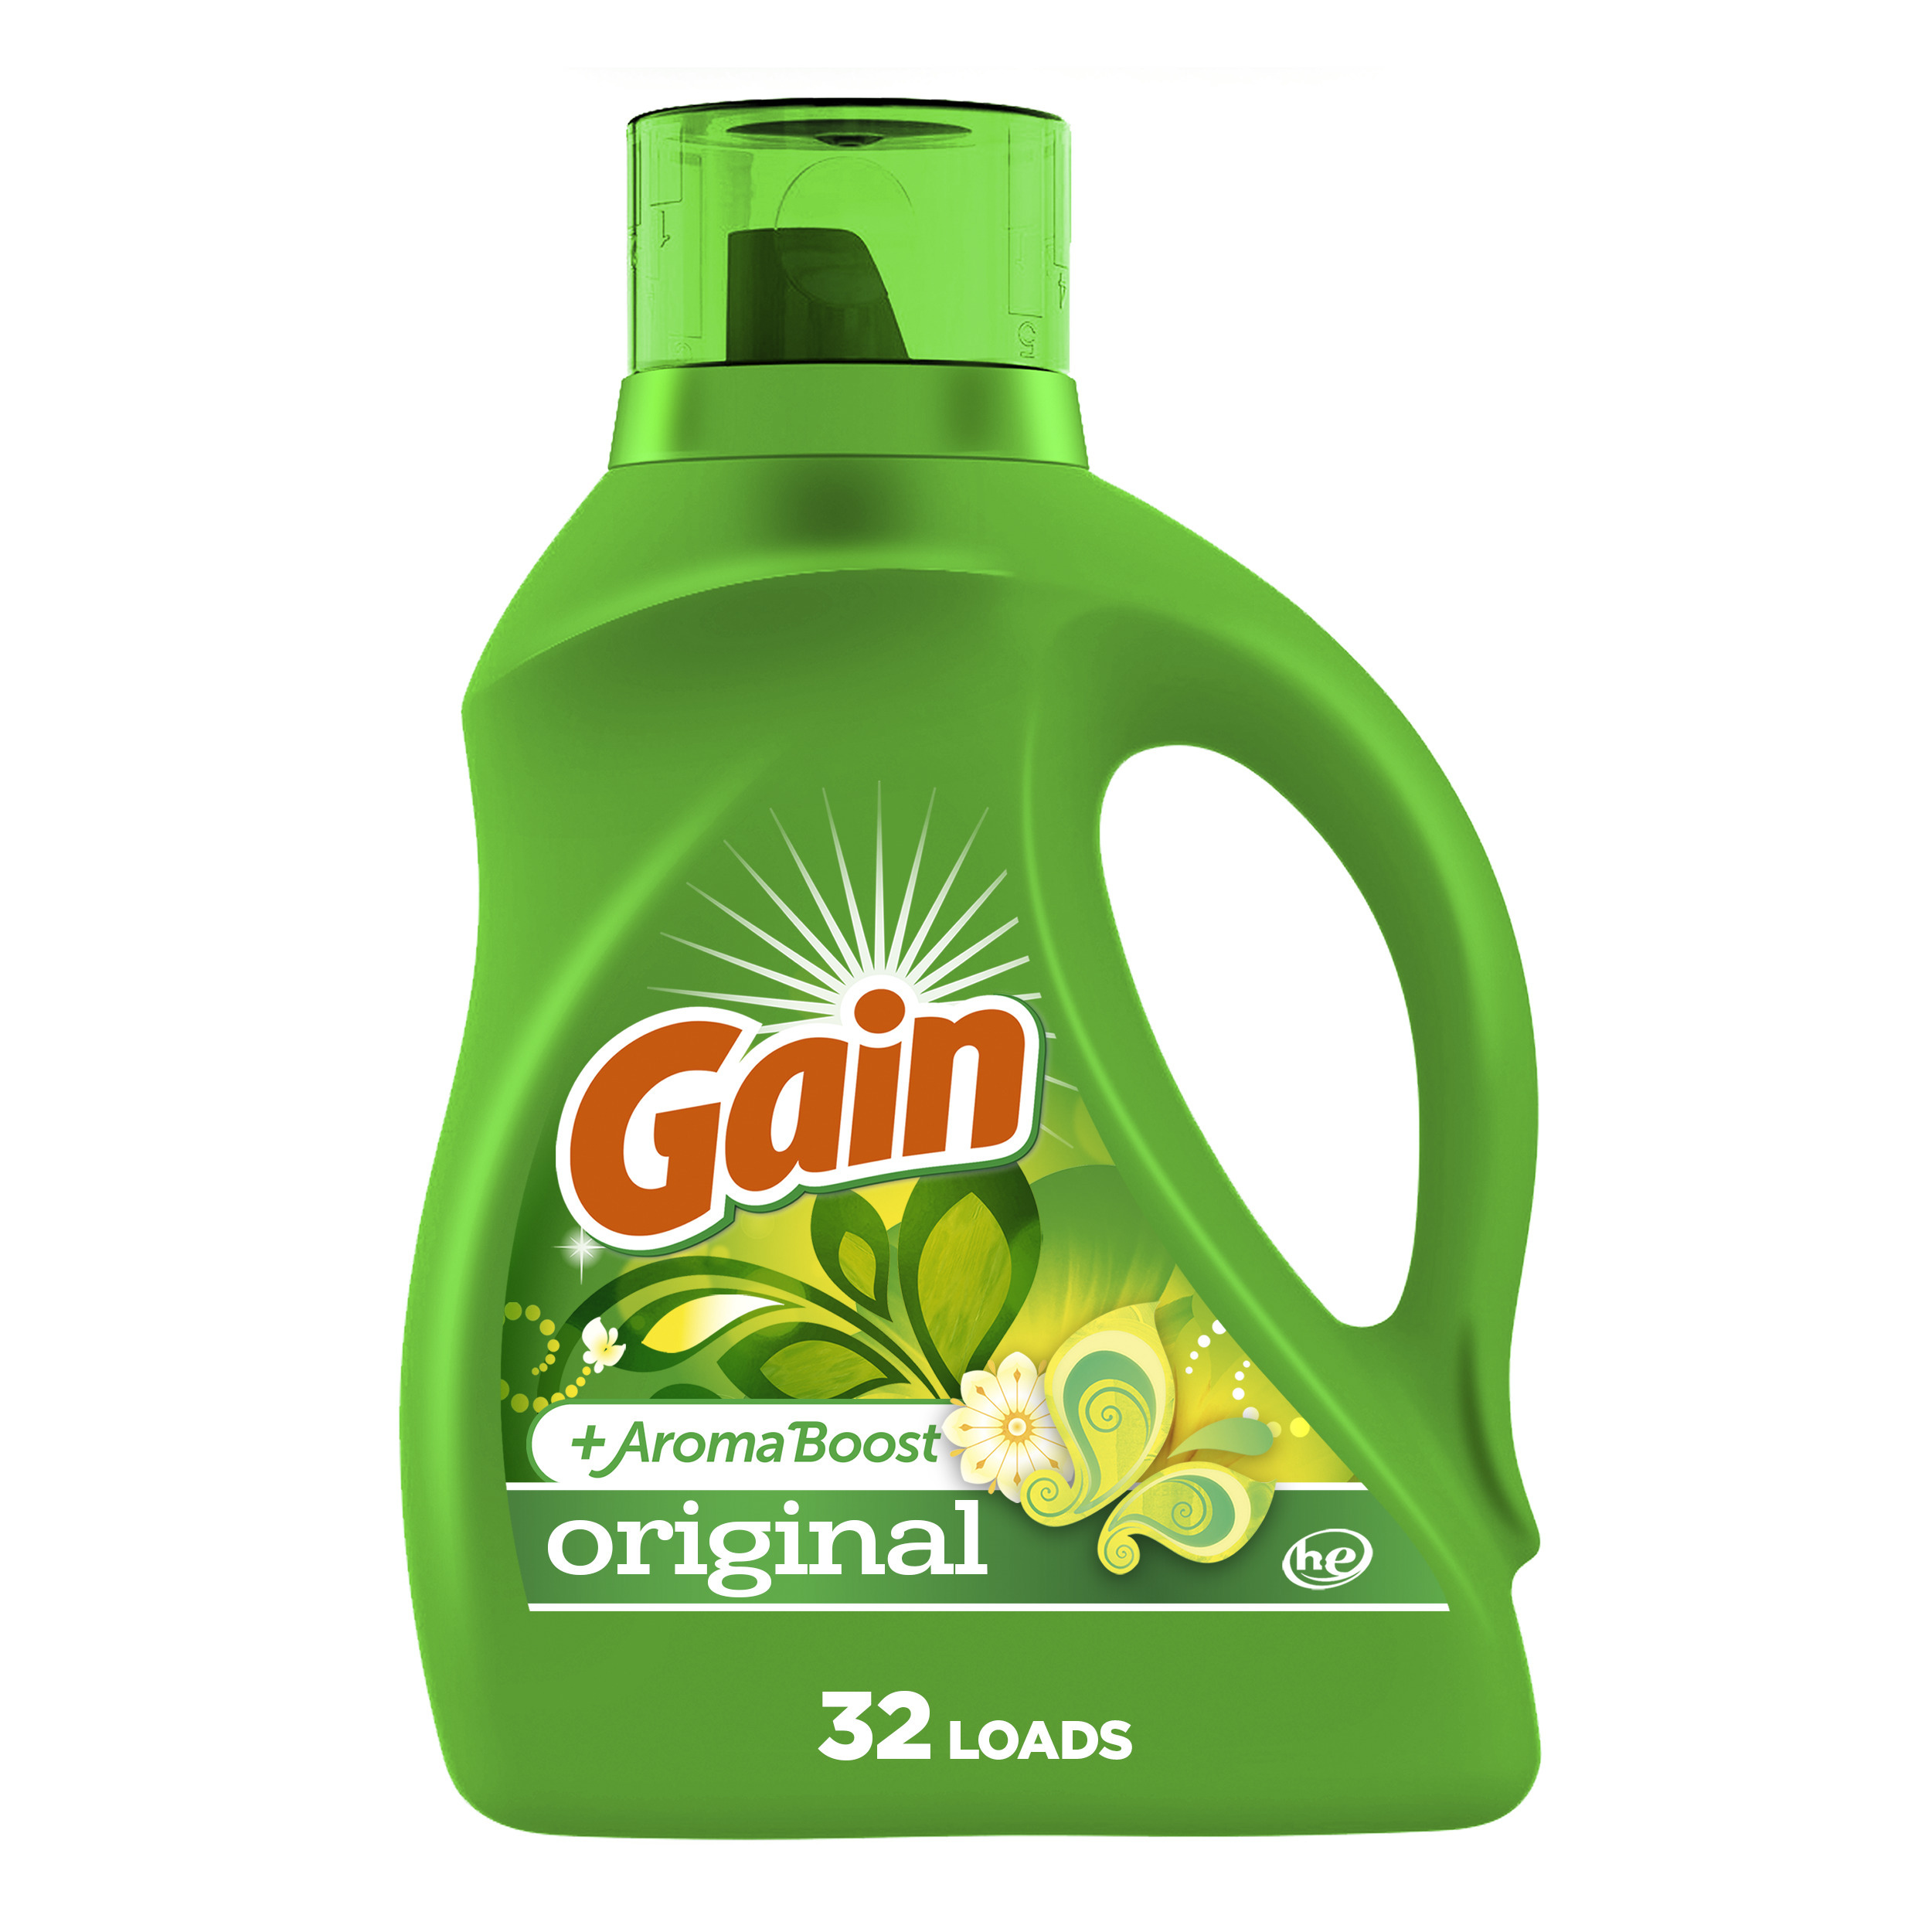 Gain + Aroma Boost Liquid Laundry Detergent, Original Scent, 32 Loads, 46 fl oz, HE Compatible - image 1 of 8